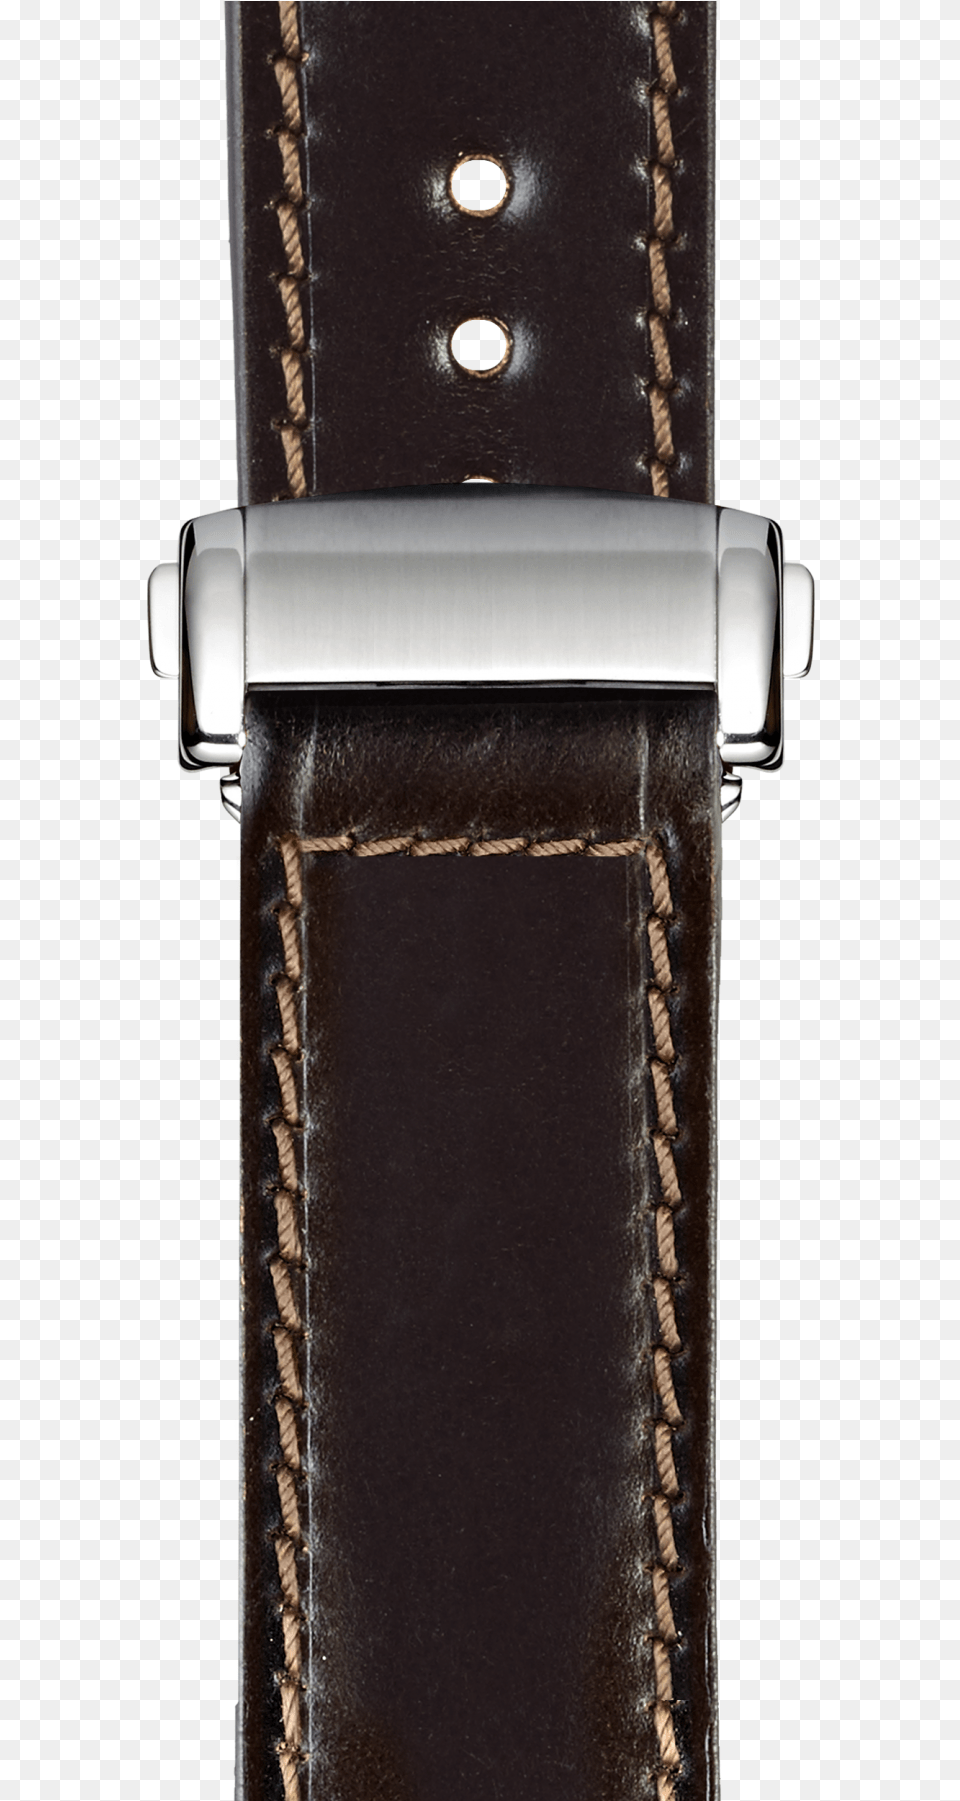 Strap, Accessories, Wristwatch, Arm, Body Part Png Image